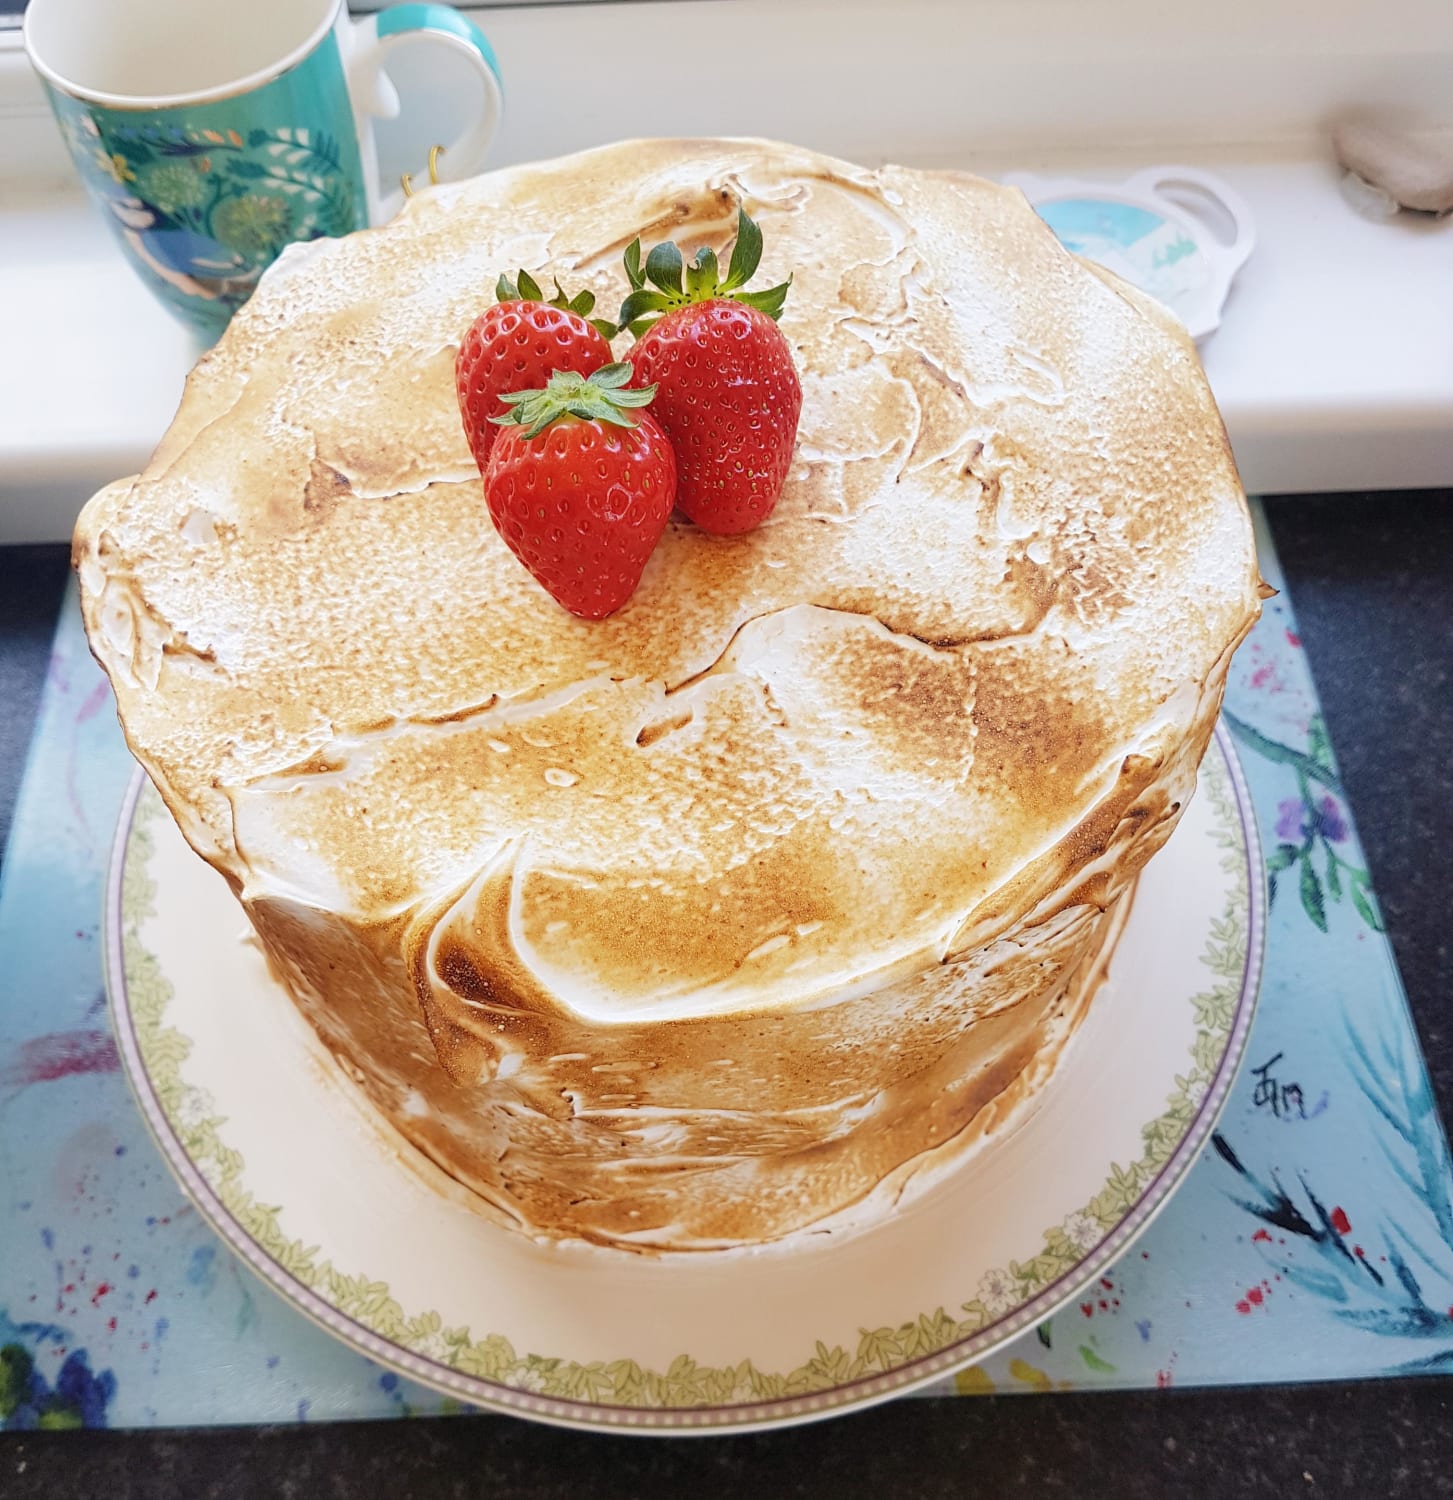 [Homemade] Lemon drizzle cake filled with vanilla Italian meringue buttercream and lemon curd, topped with brûlée Italian meringue